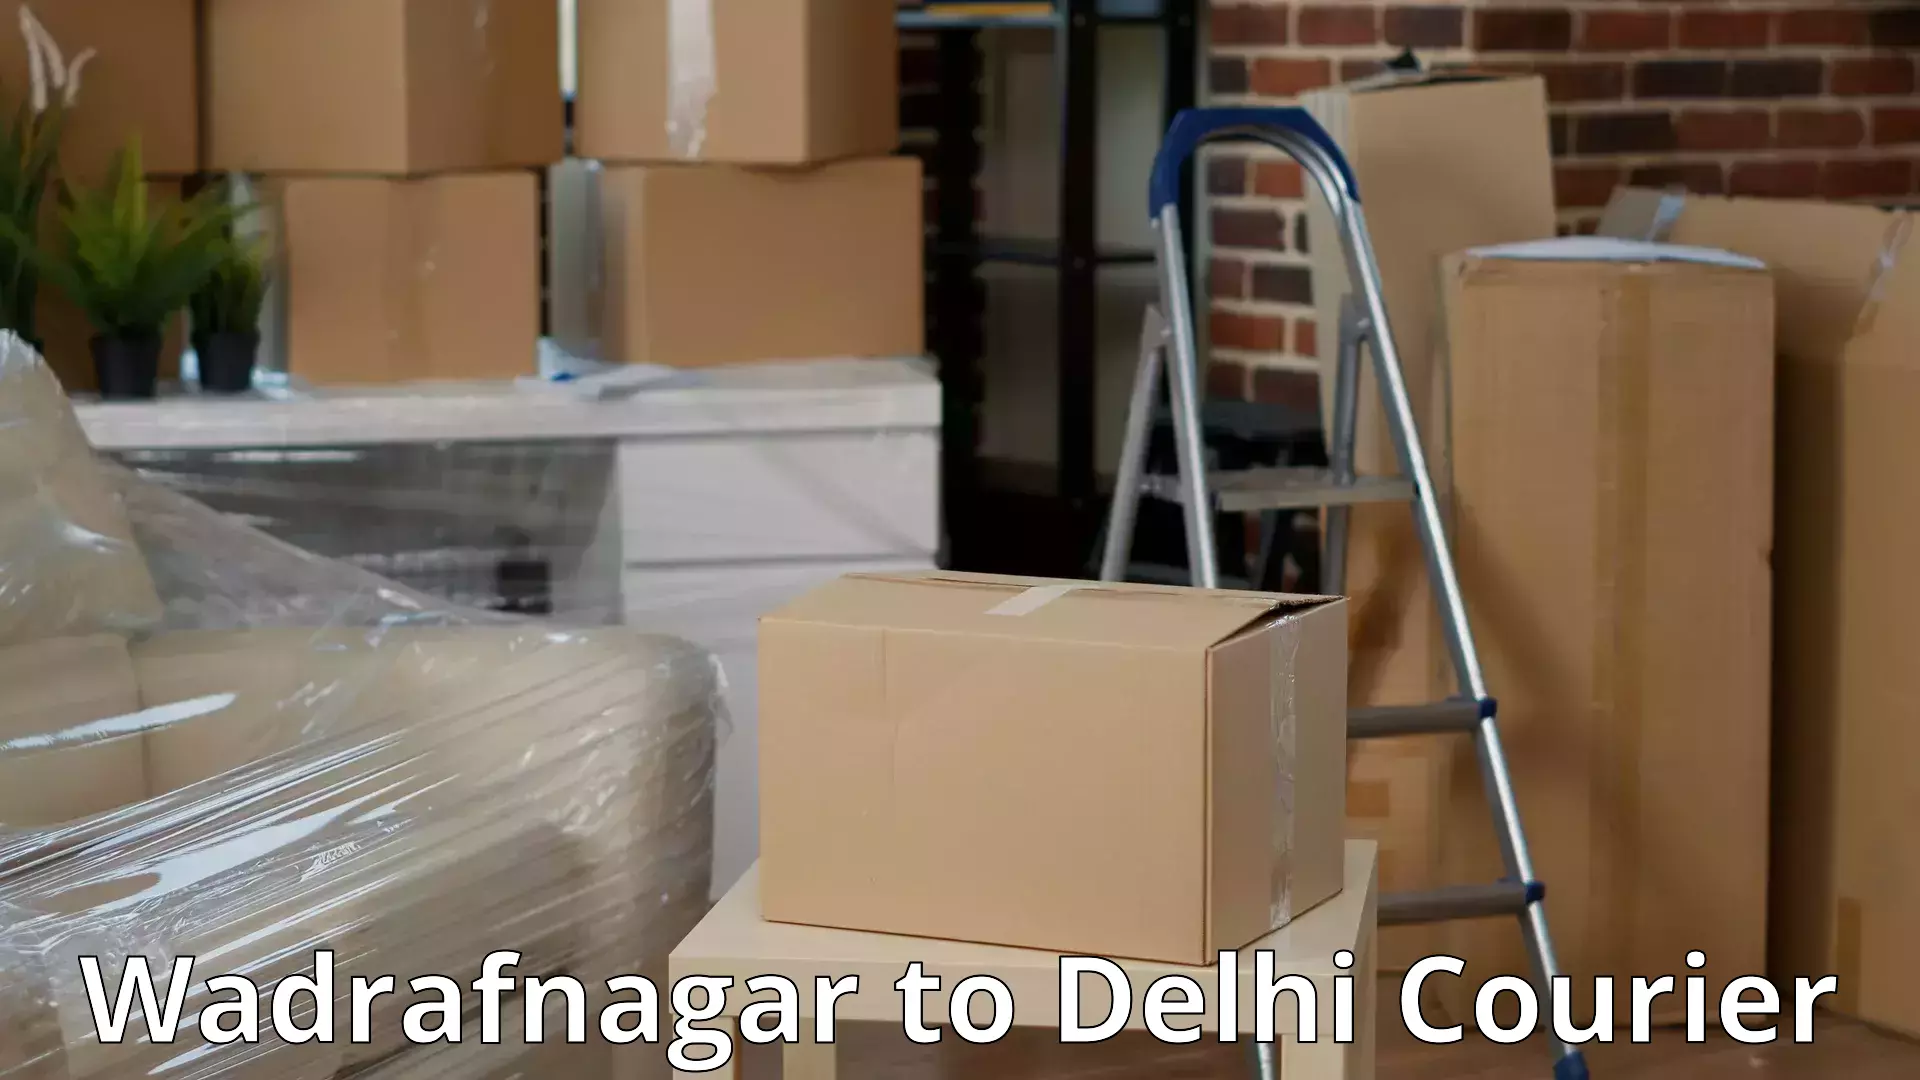 Professional moving company Wadrafnagar to Indraprastha